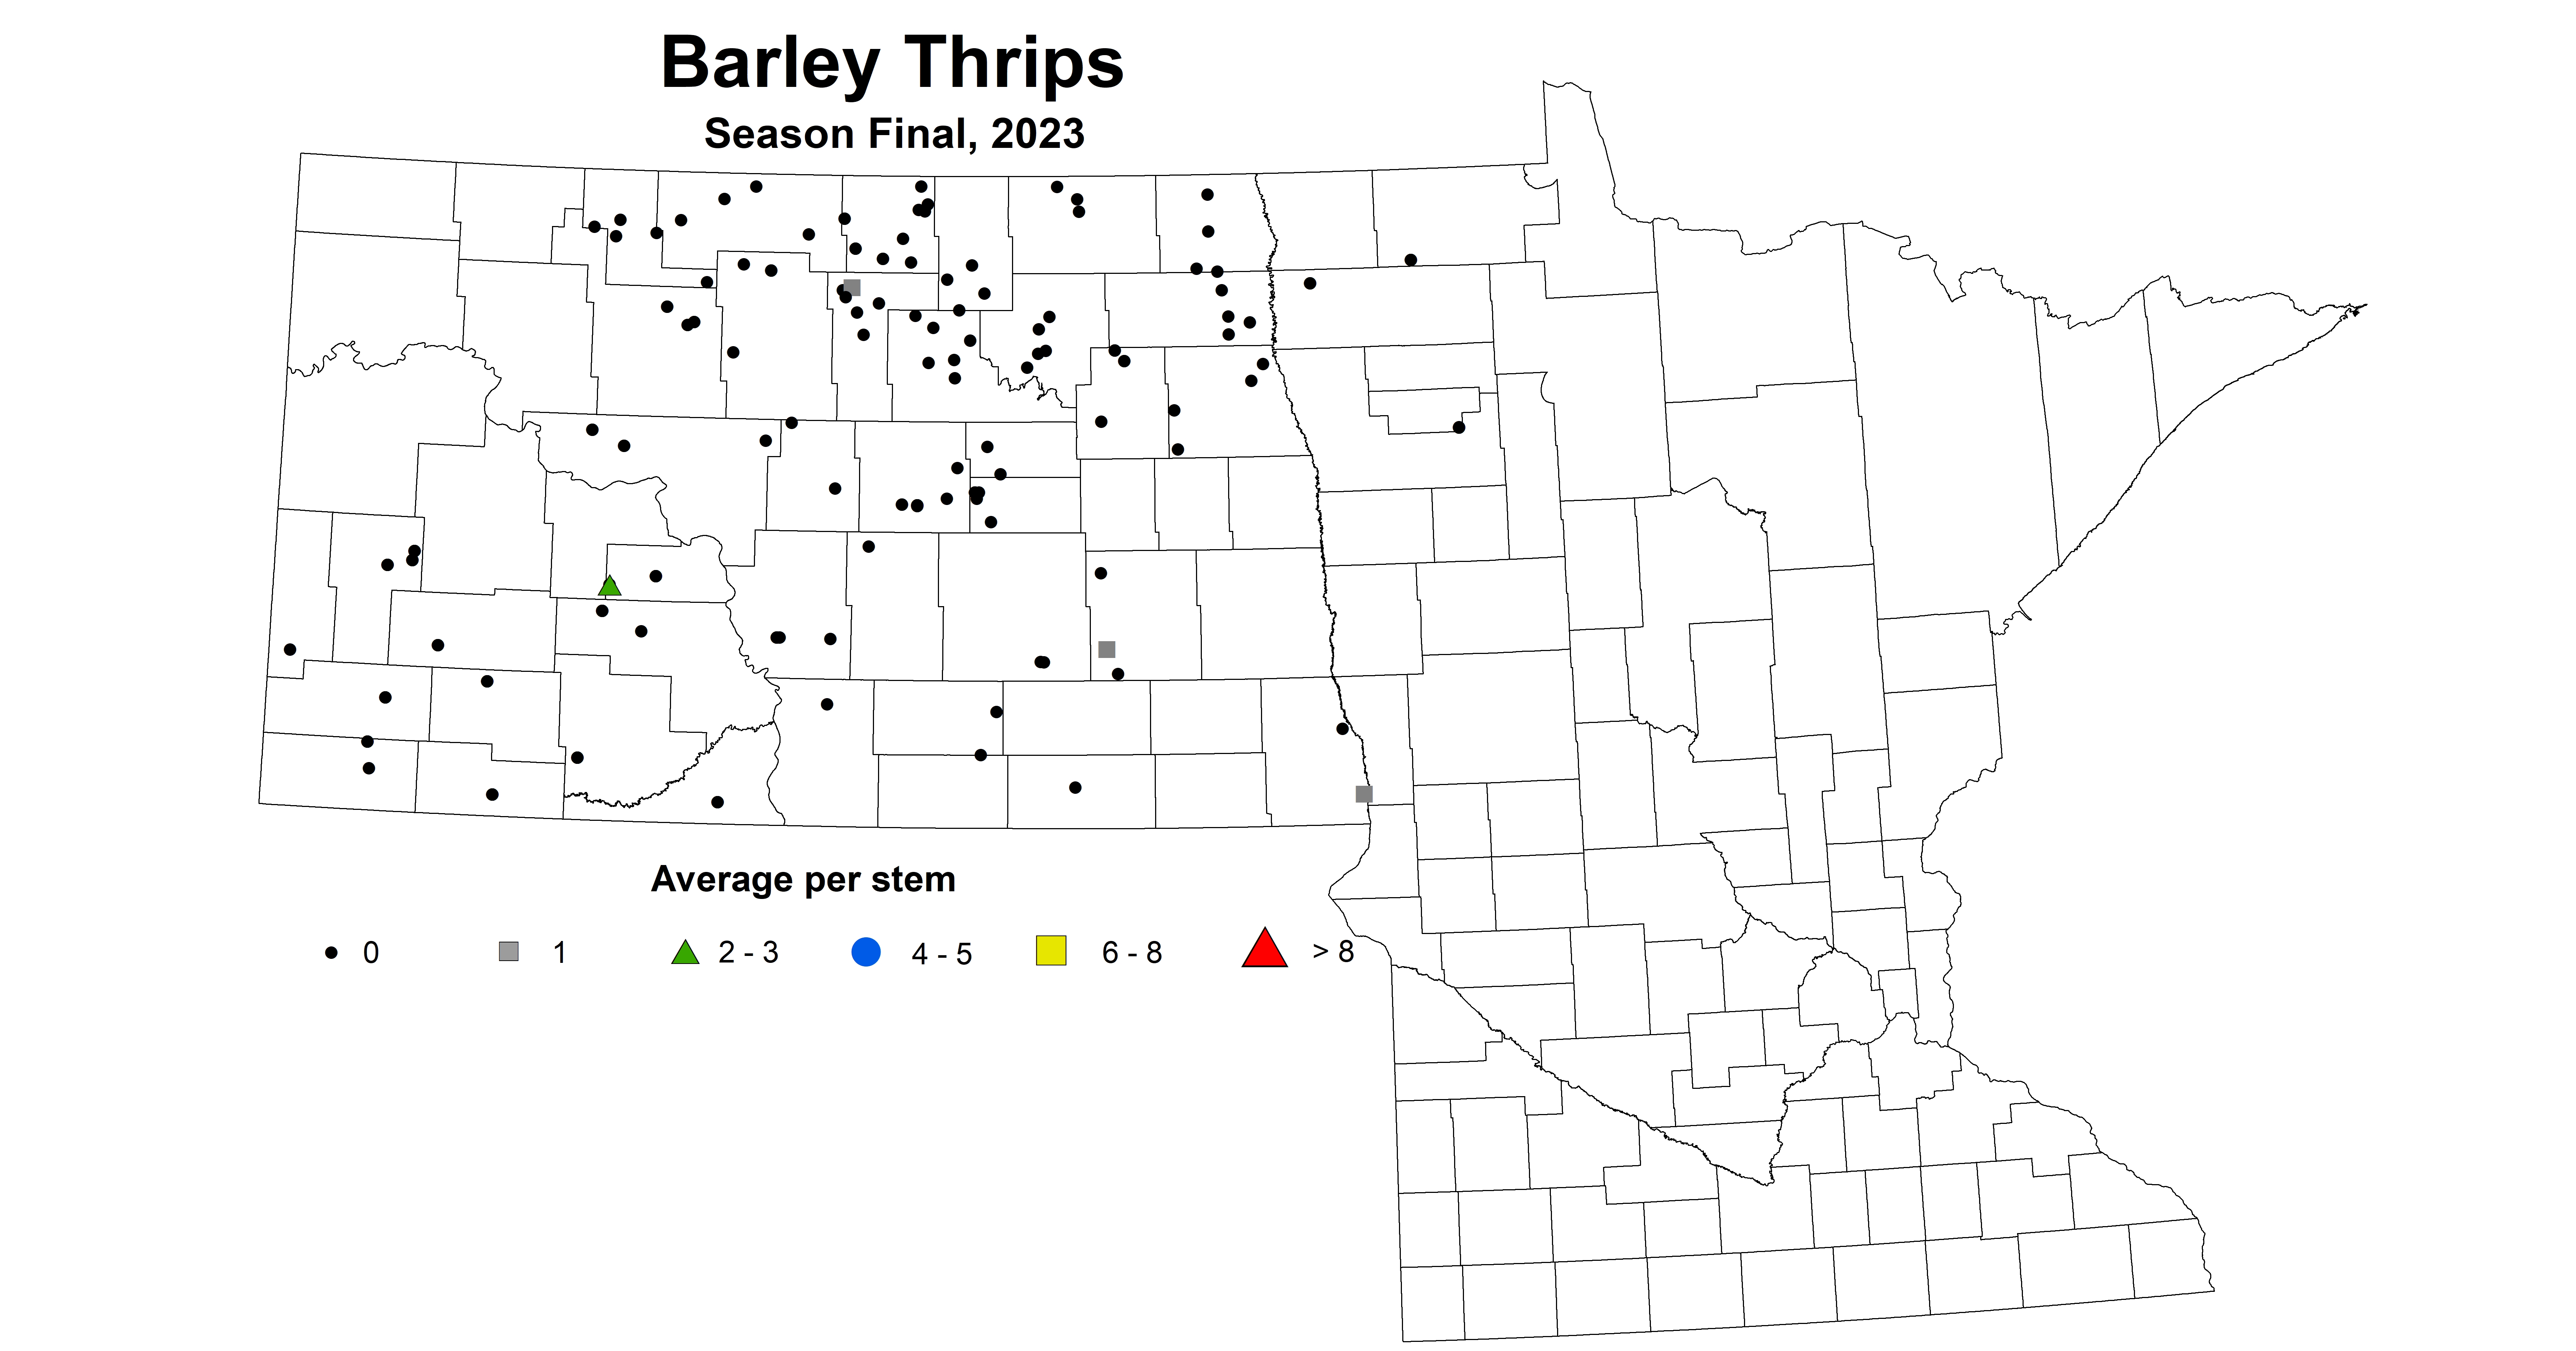 barley thrips season final 2023